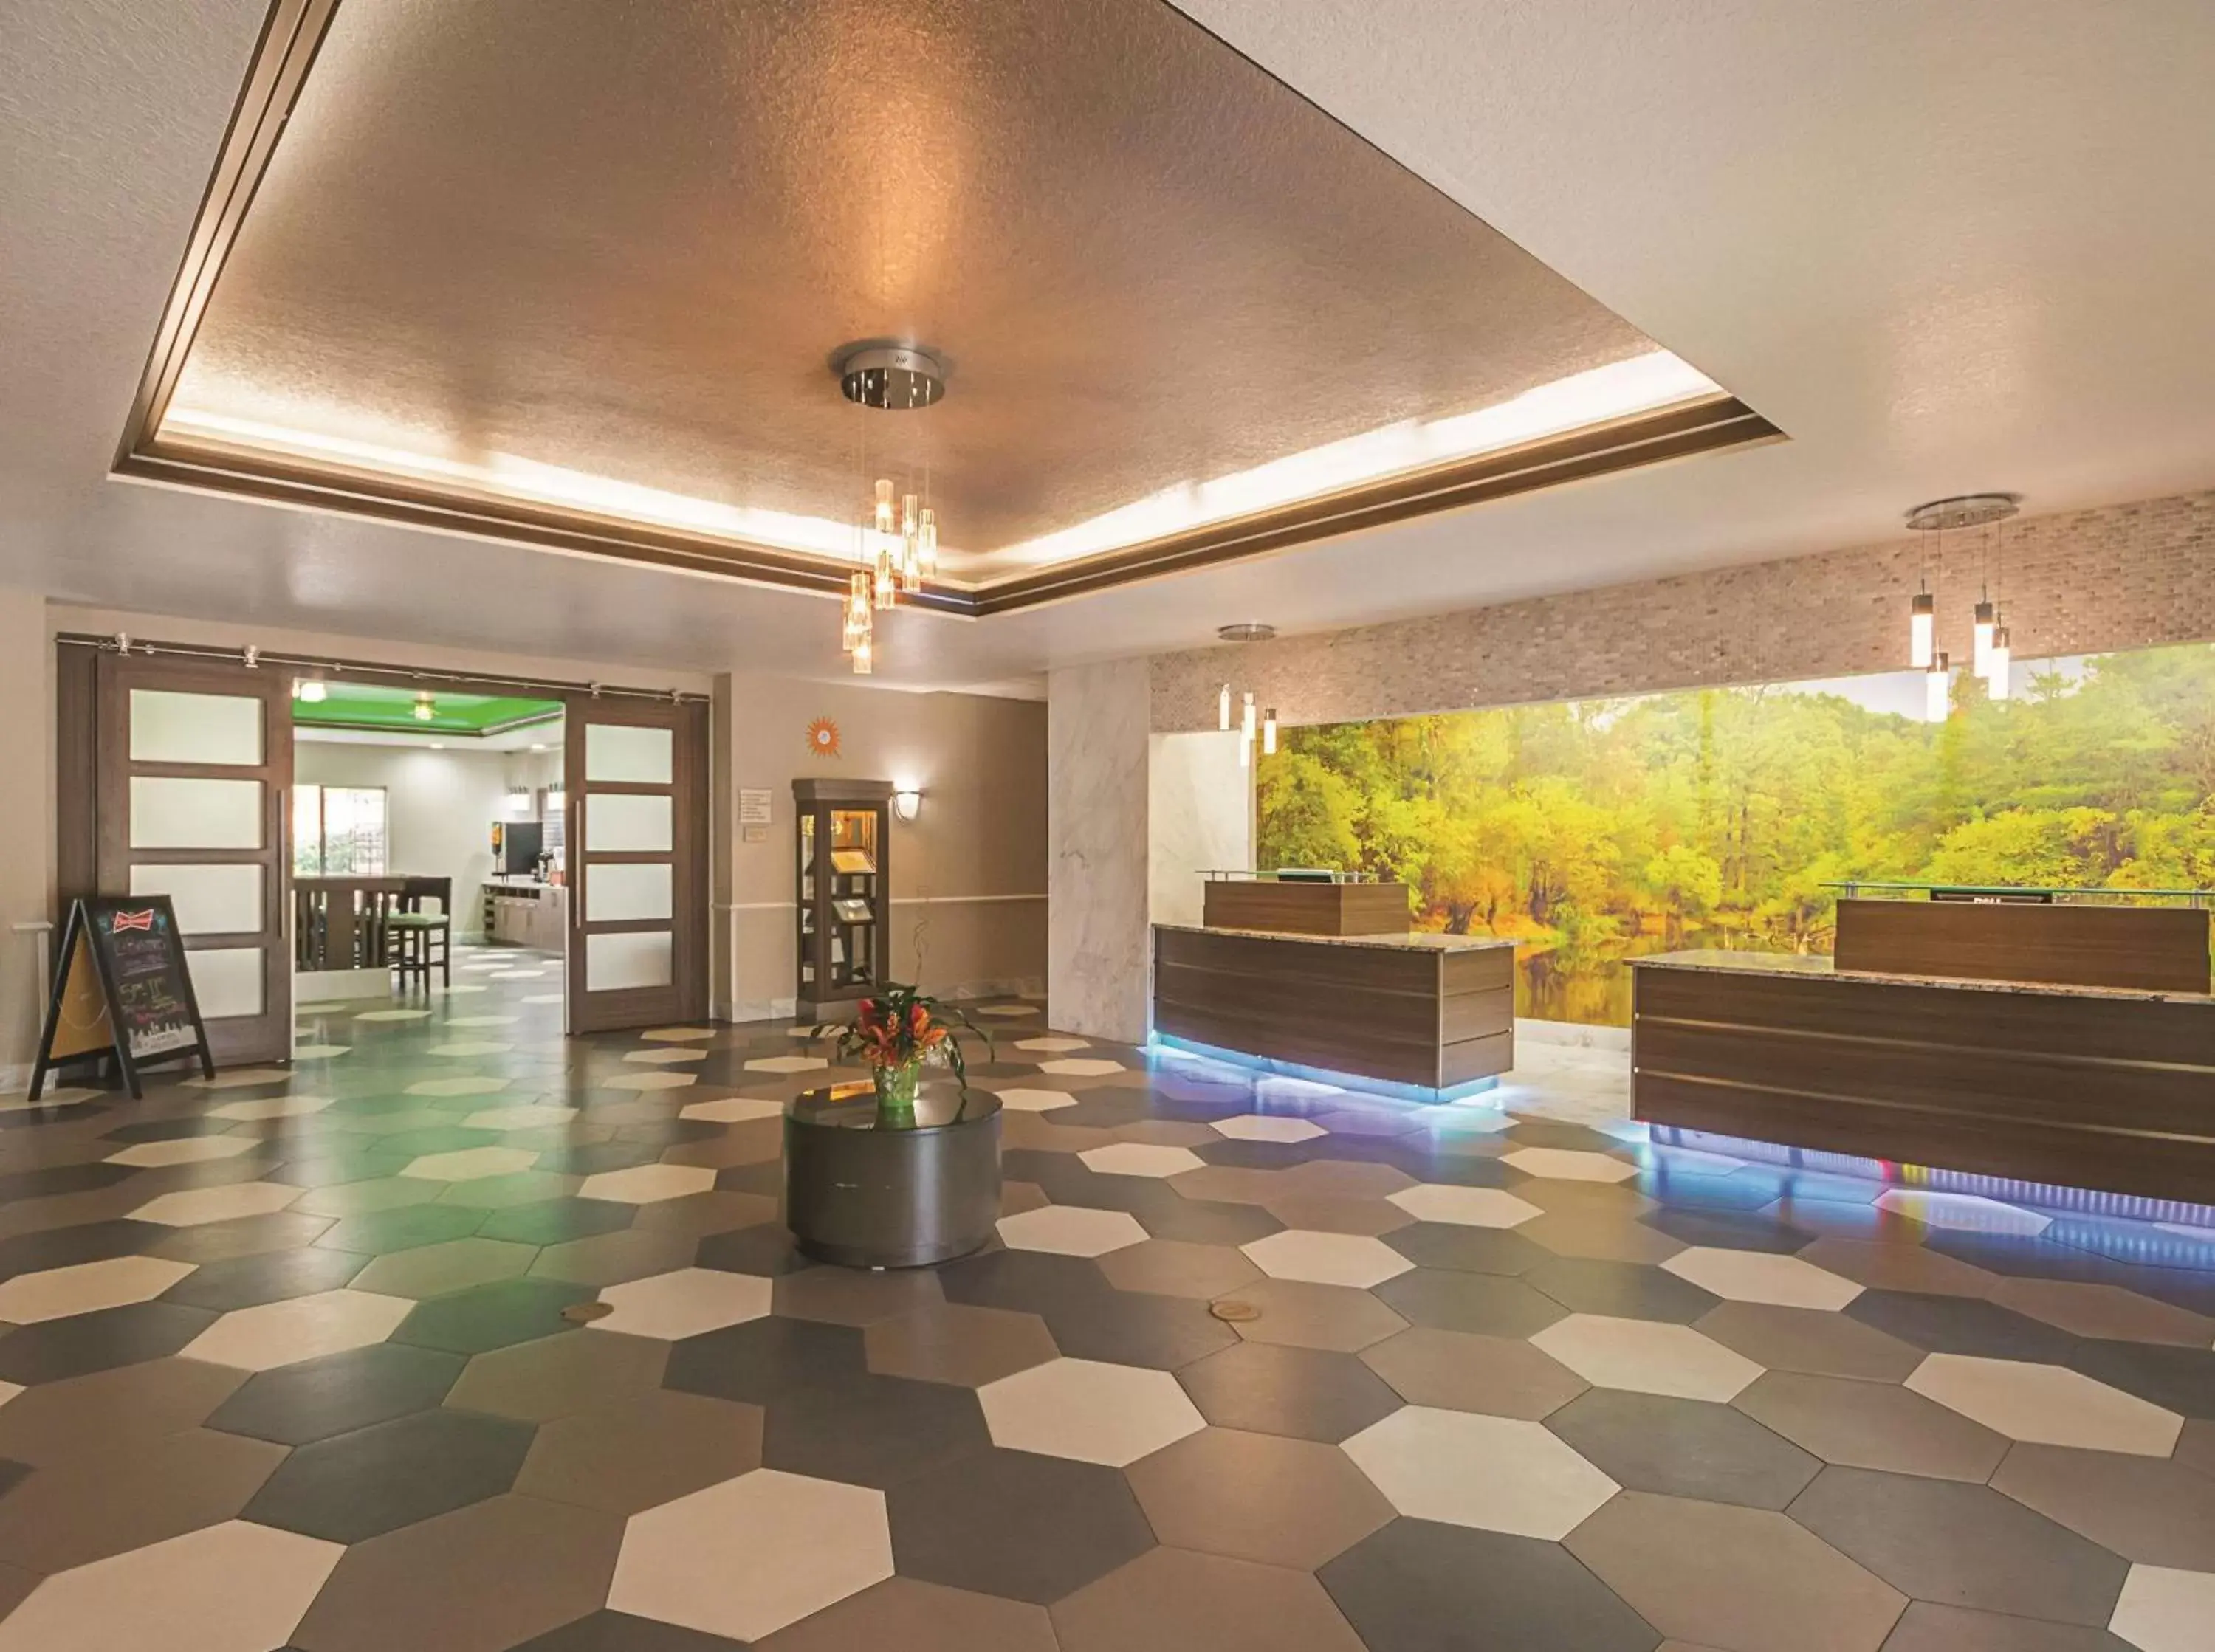 Lobby or reception in La Quinta Inn & Suite Kingwood Houston IAH Airport 53200